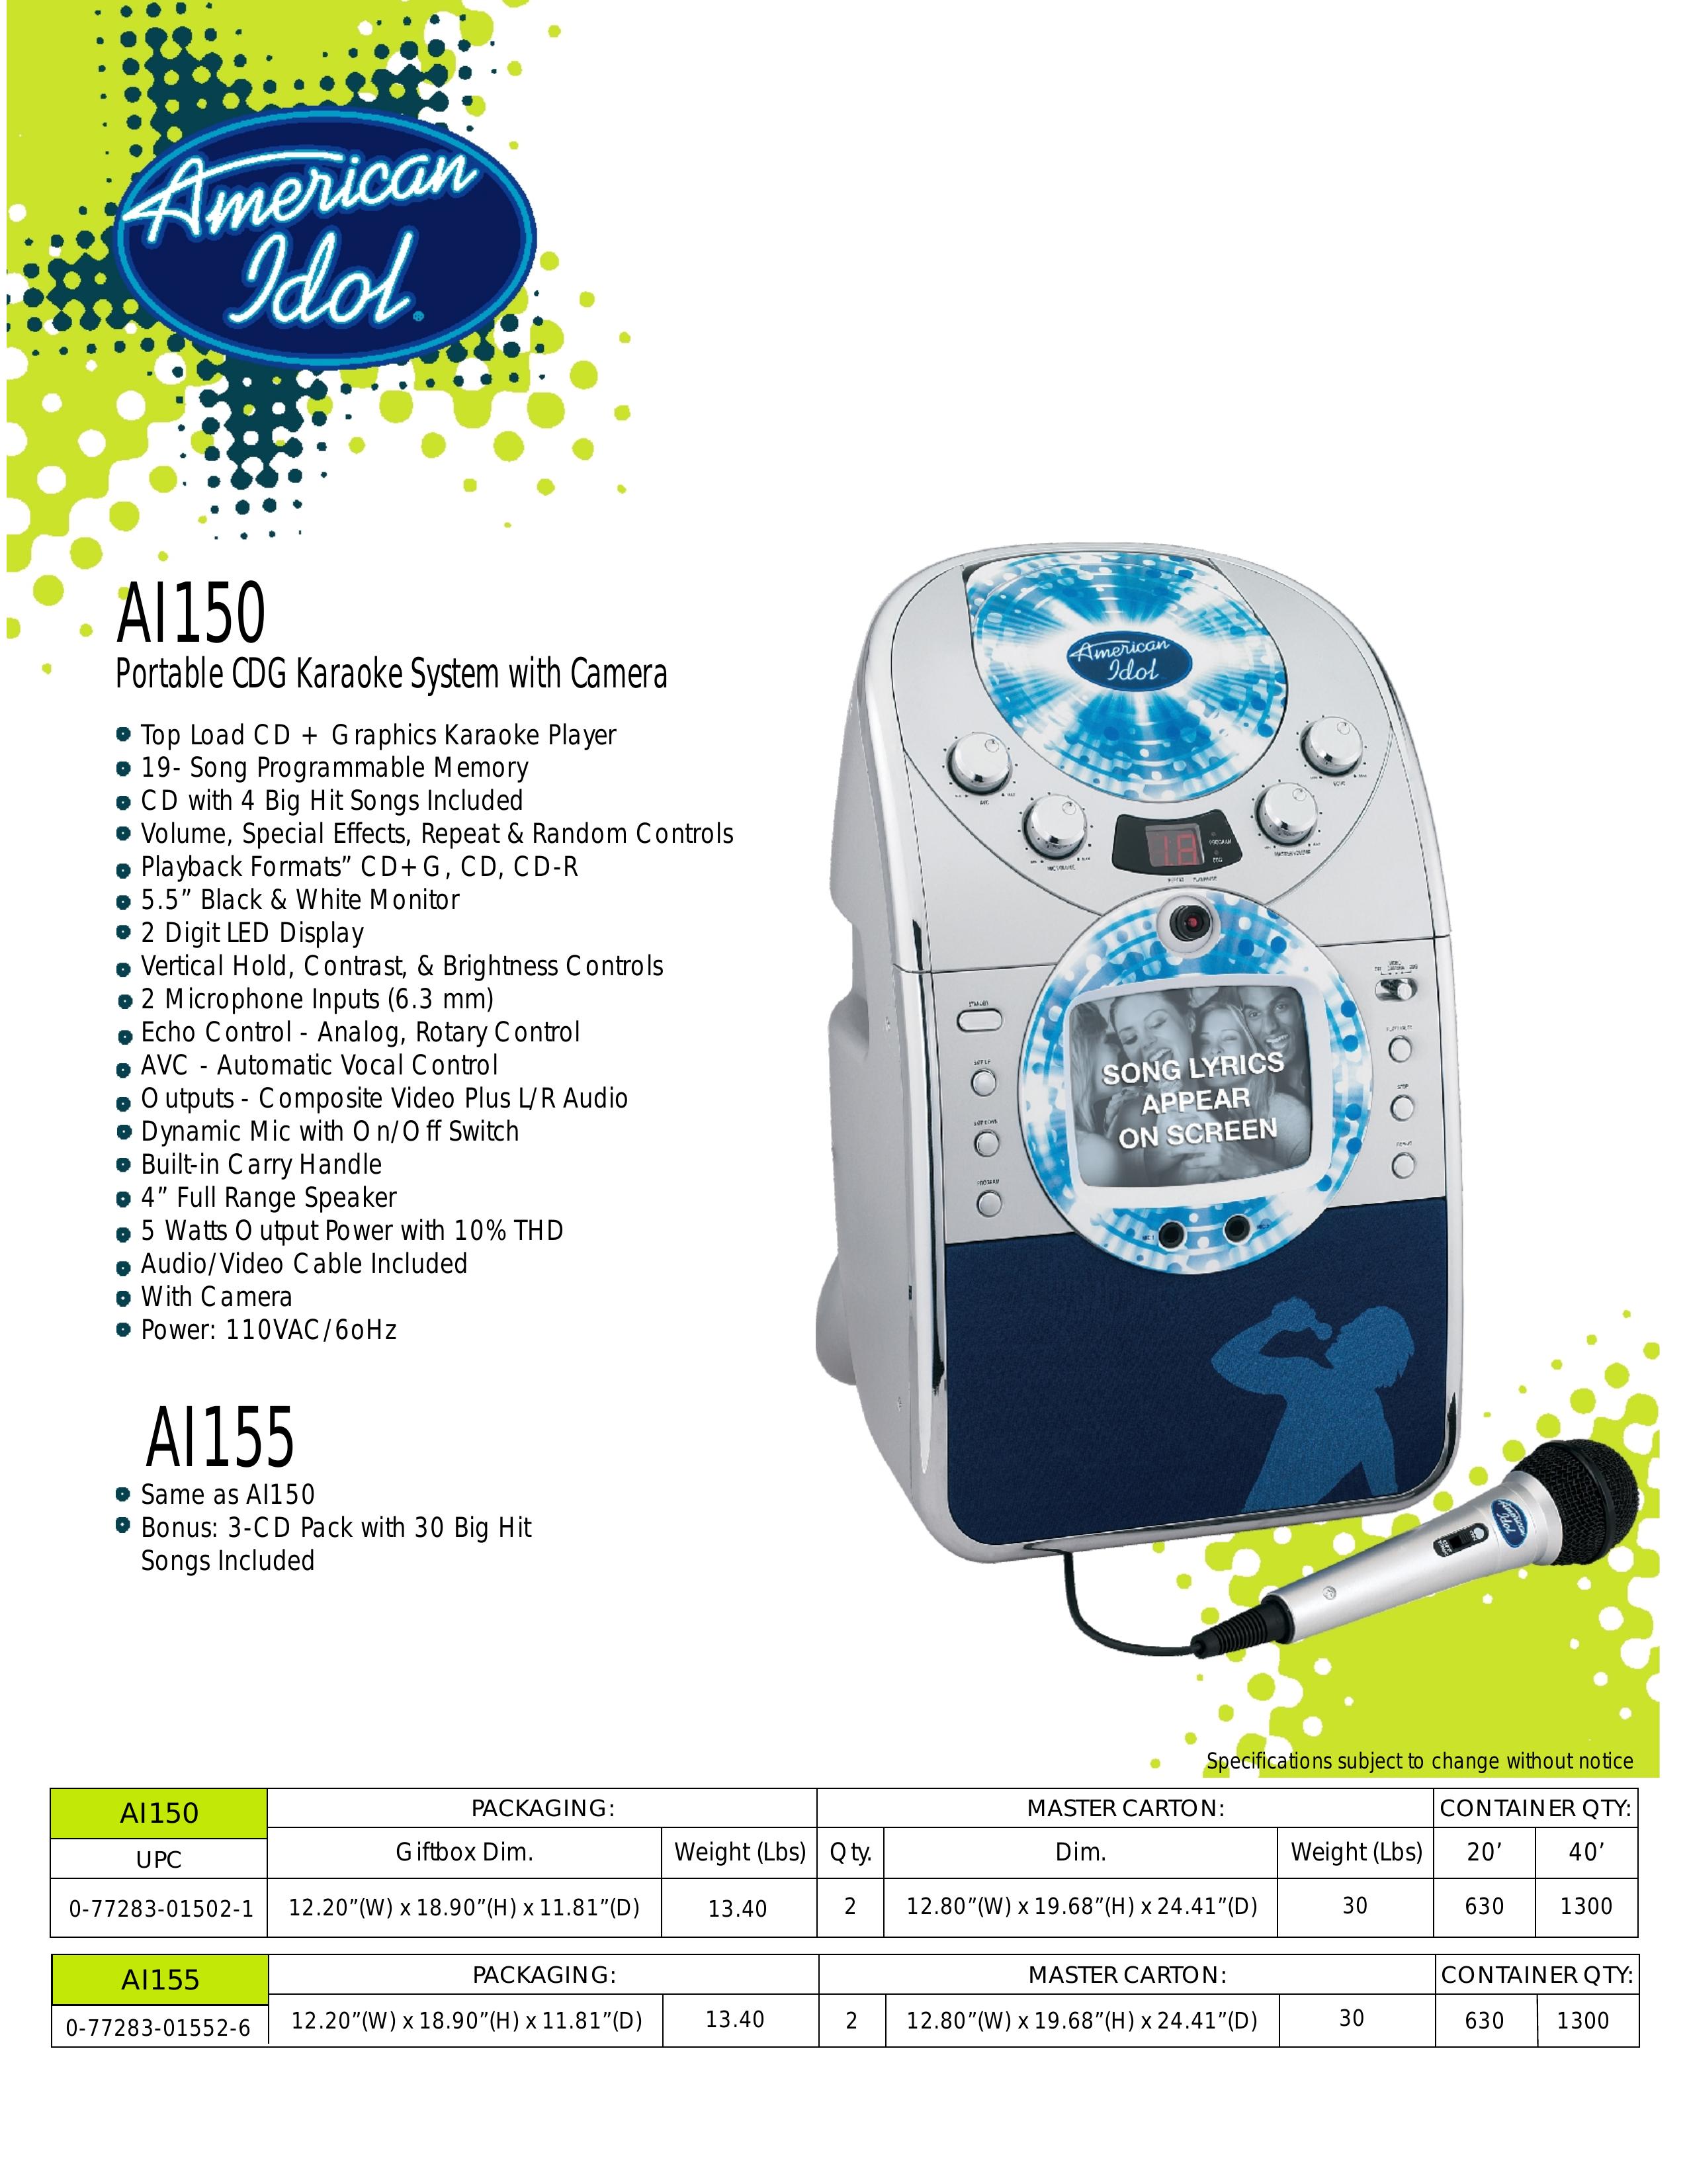 Spectra AI155 Karaoke Machine User Manual